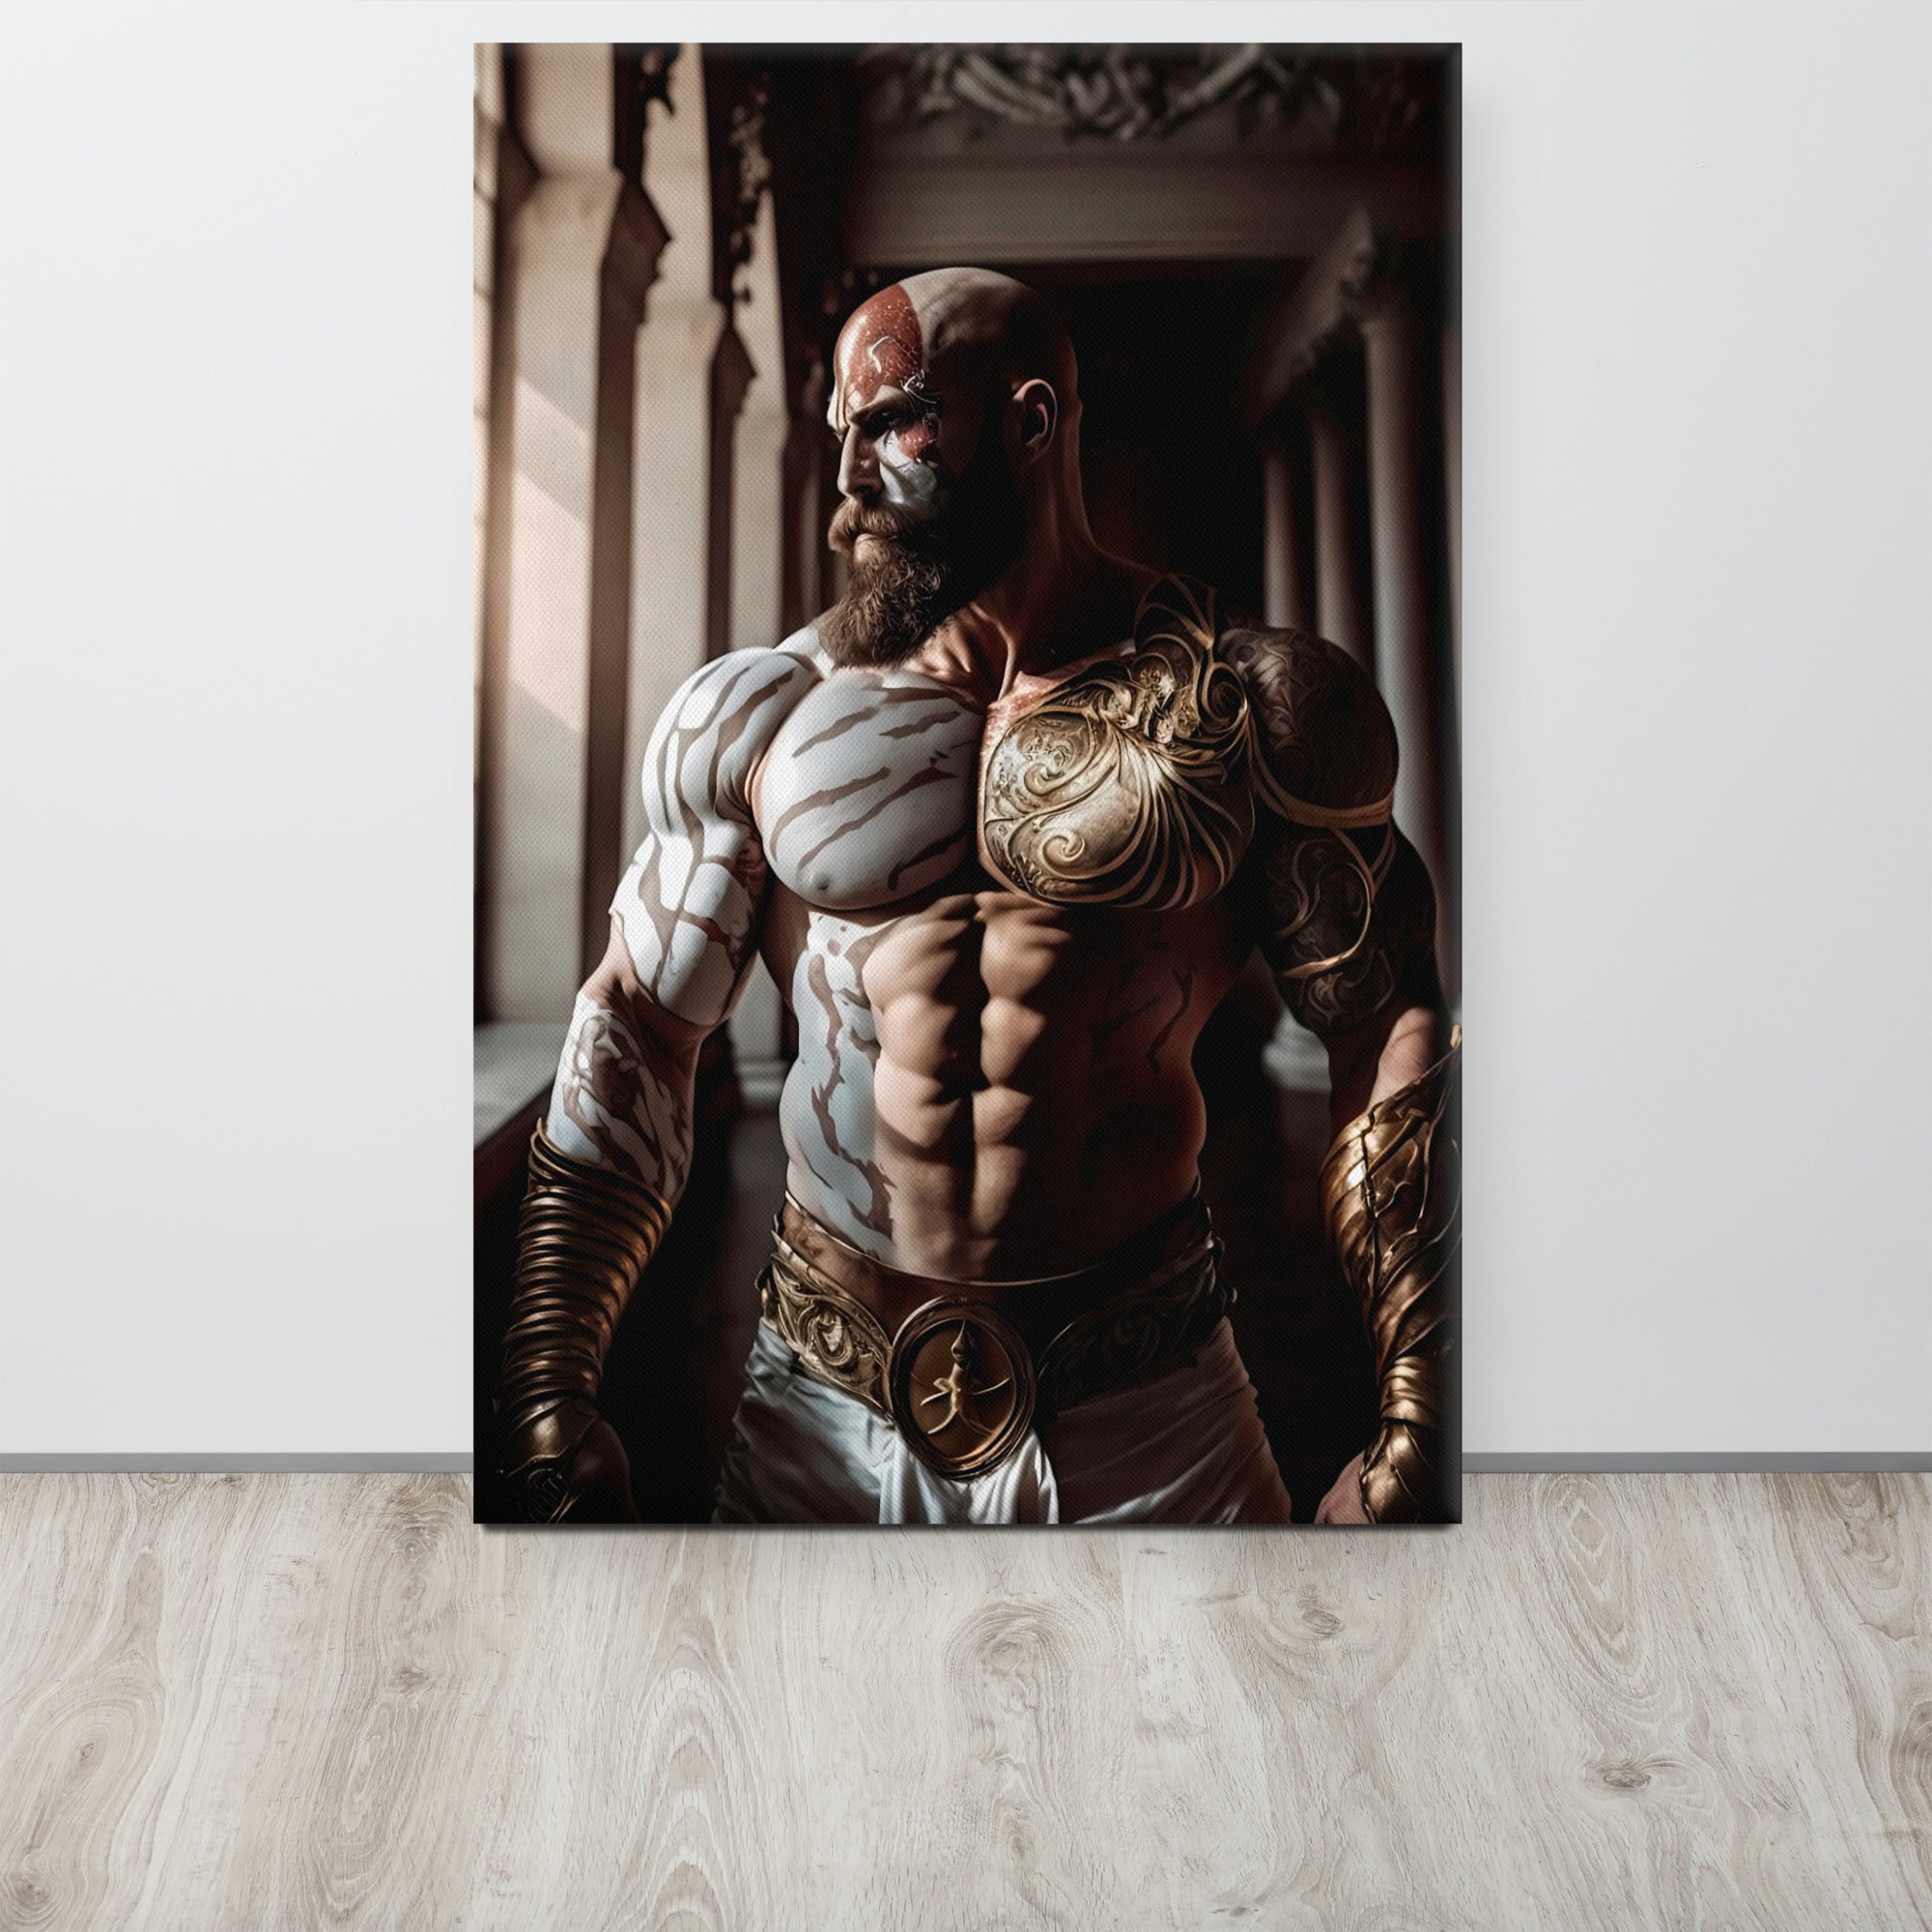 The Kratos